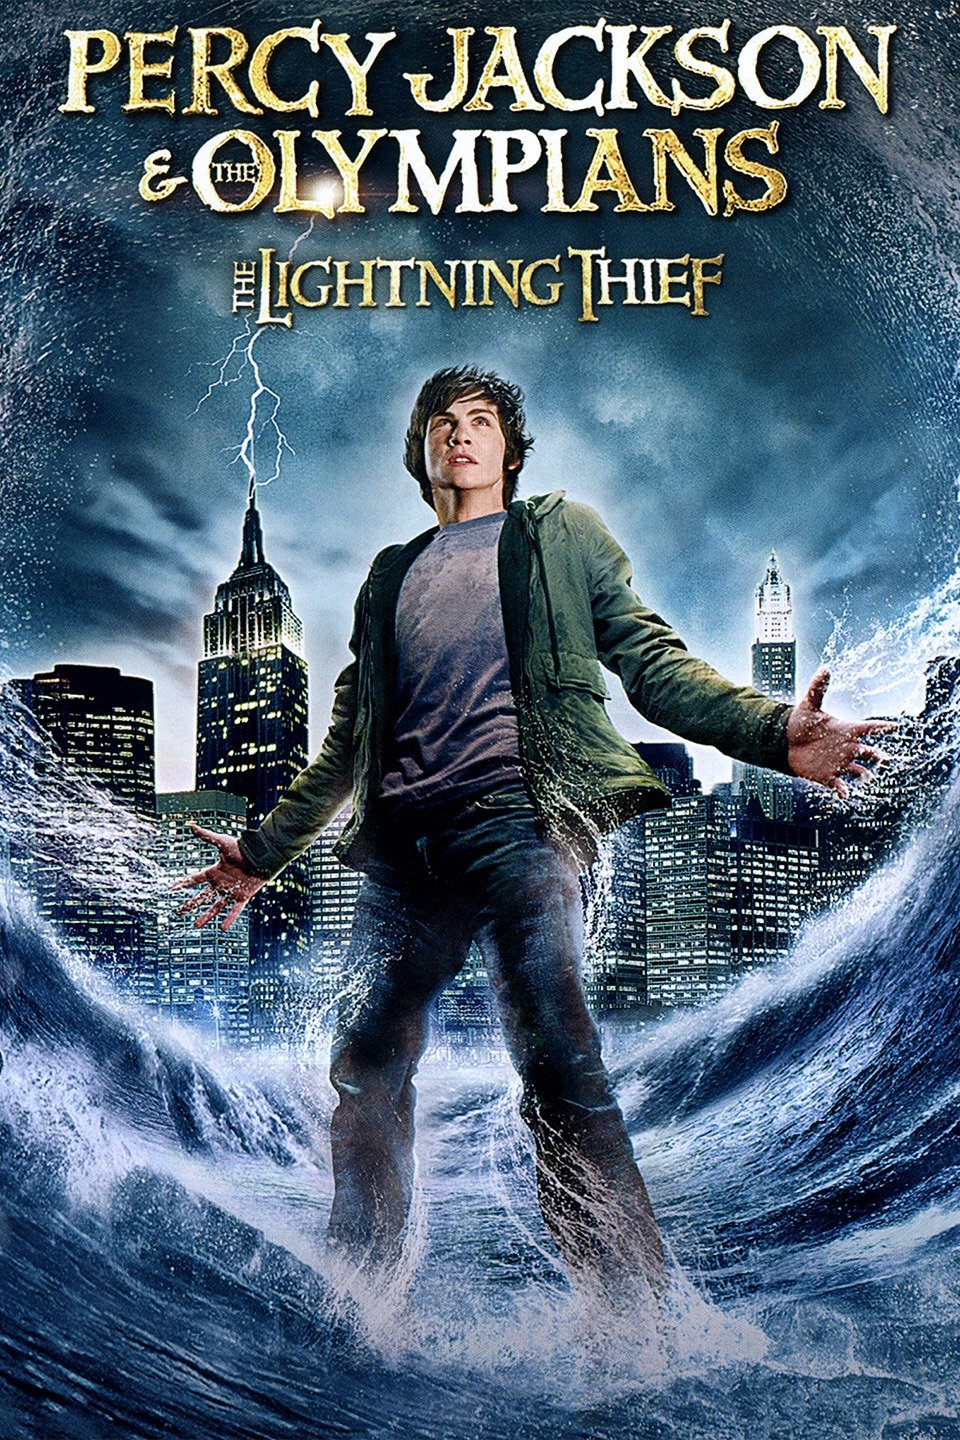 [MINI Super-HQ] Percy Jackson & the Olympians: The Lightning Thief (2010) เพอร์ซีย์ แจ็คสันกับสายฟ้าที่หายไป ภาค 1 [1080p] [พากย์ไทย 5.1 + เสียงอังกฤษ DTS] [บรรยายไทย + อังกฤษ] [เสียงไทย + ซับไทย] [ONE2UP]